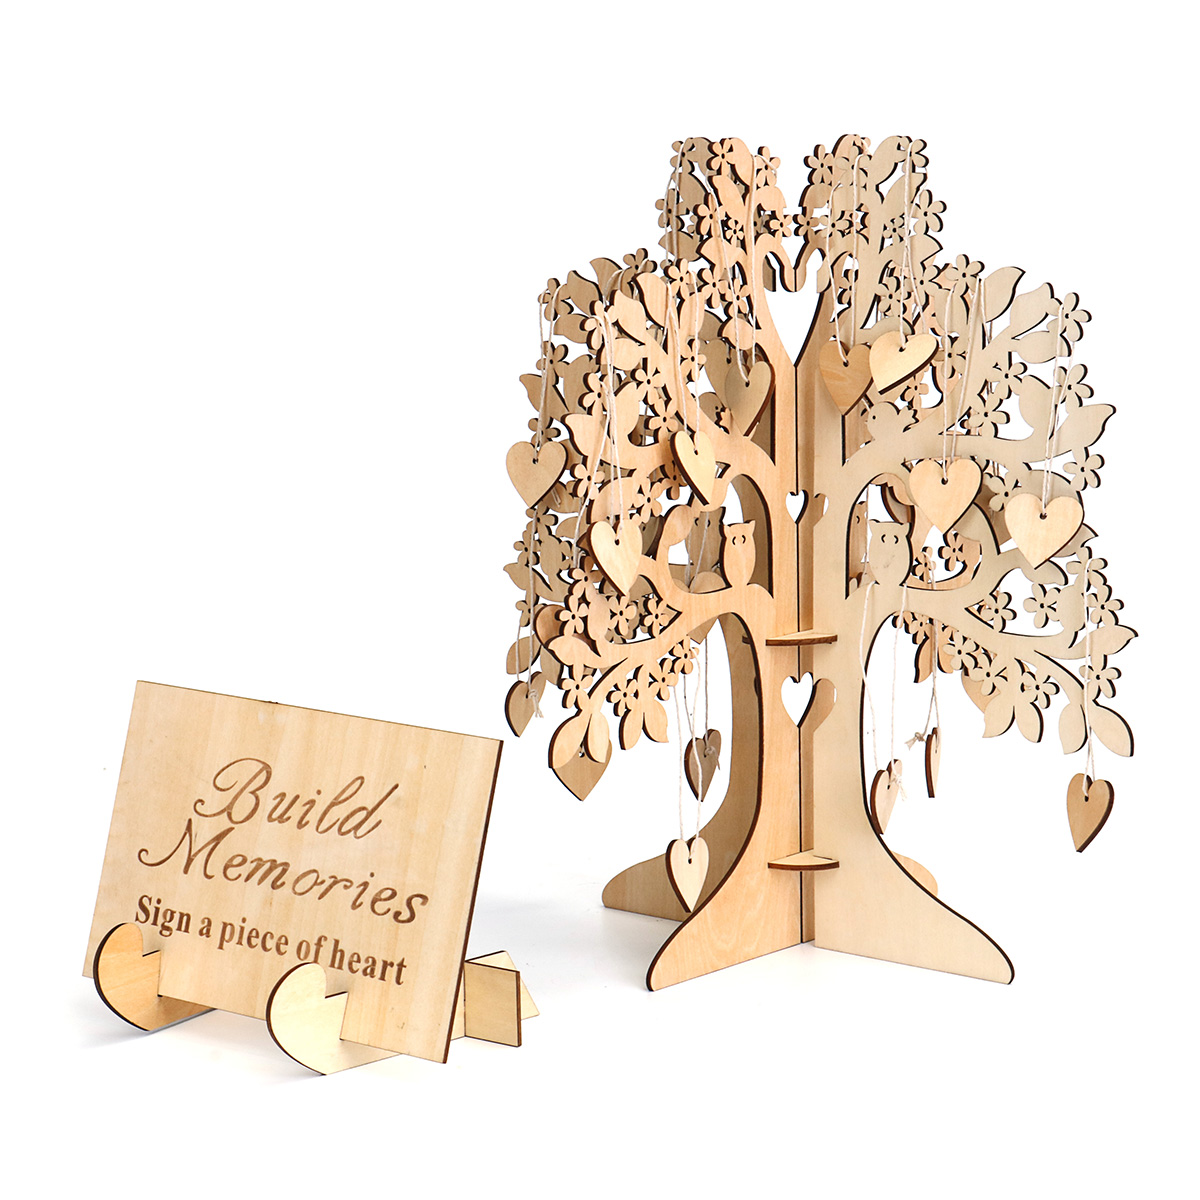 DIY-Wedding-Book-Tree-Marriage-Guest-Book-Wooden-Tree-Hearts-Pendant-Drop-Ornaments-Decorations-1468183-5